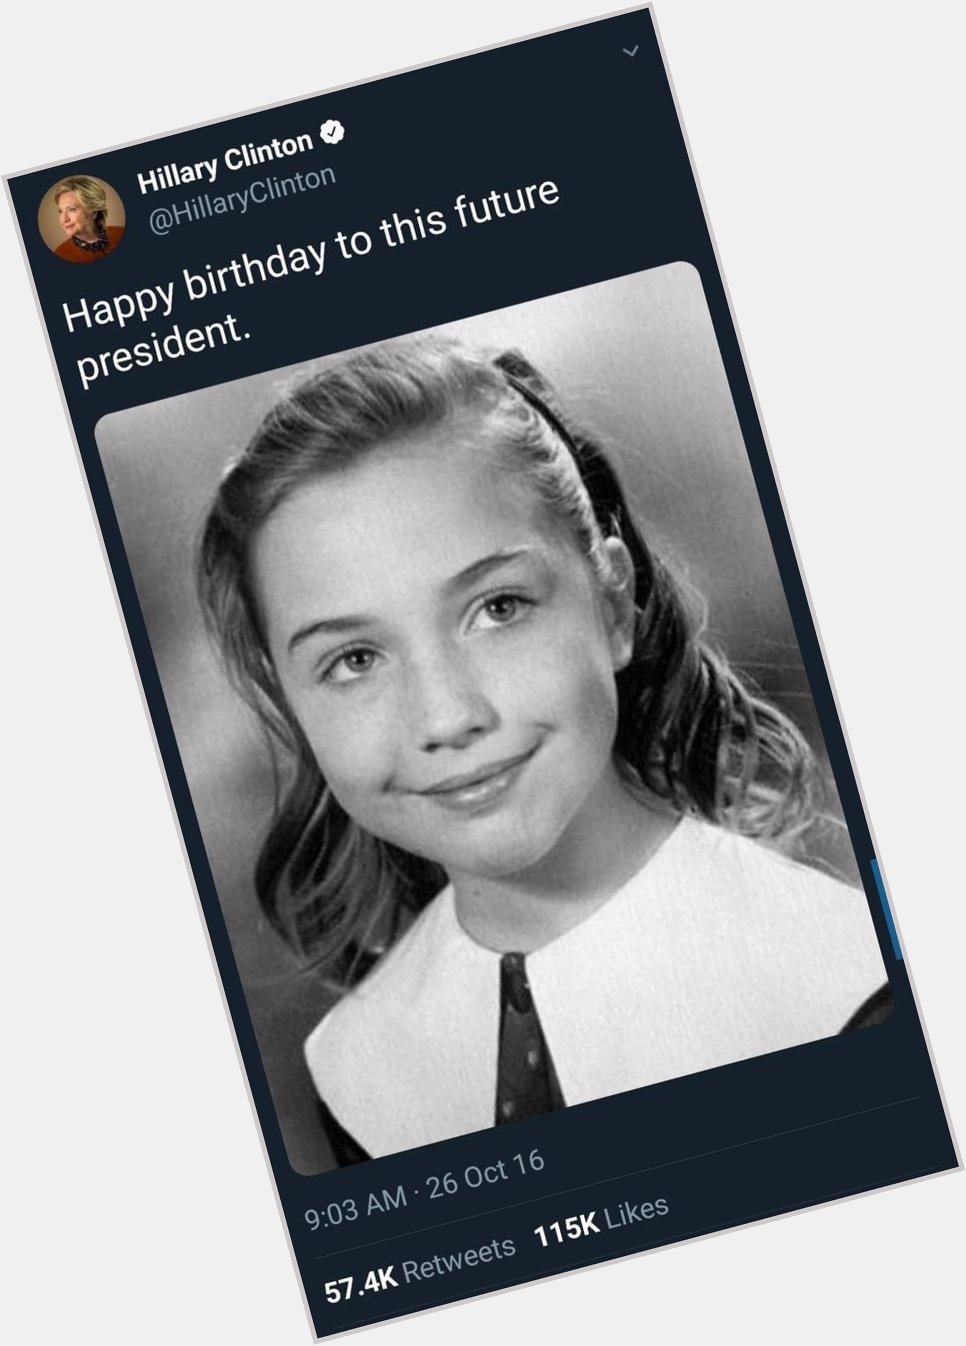 Happy Birthday, Hillary Clinton. 

LOL. 